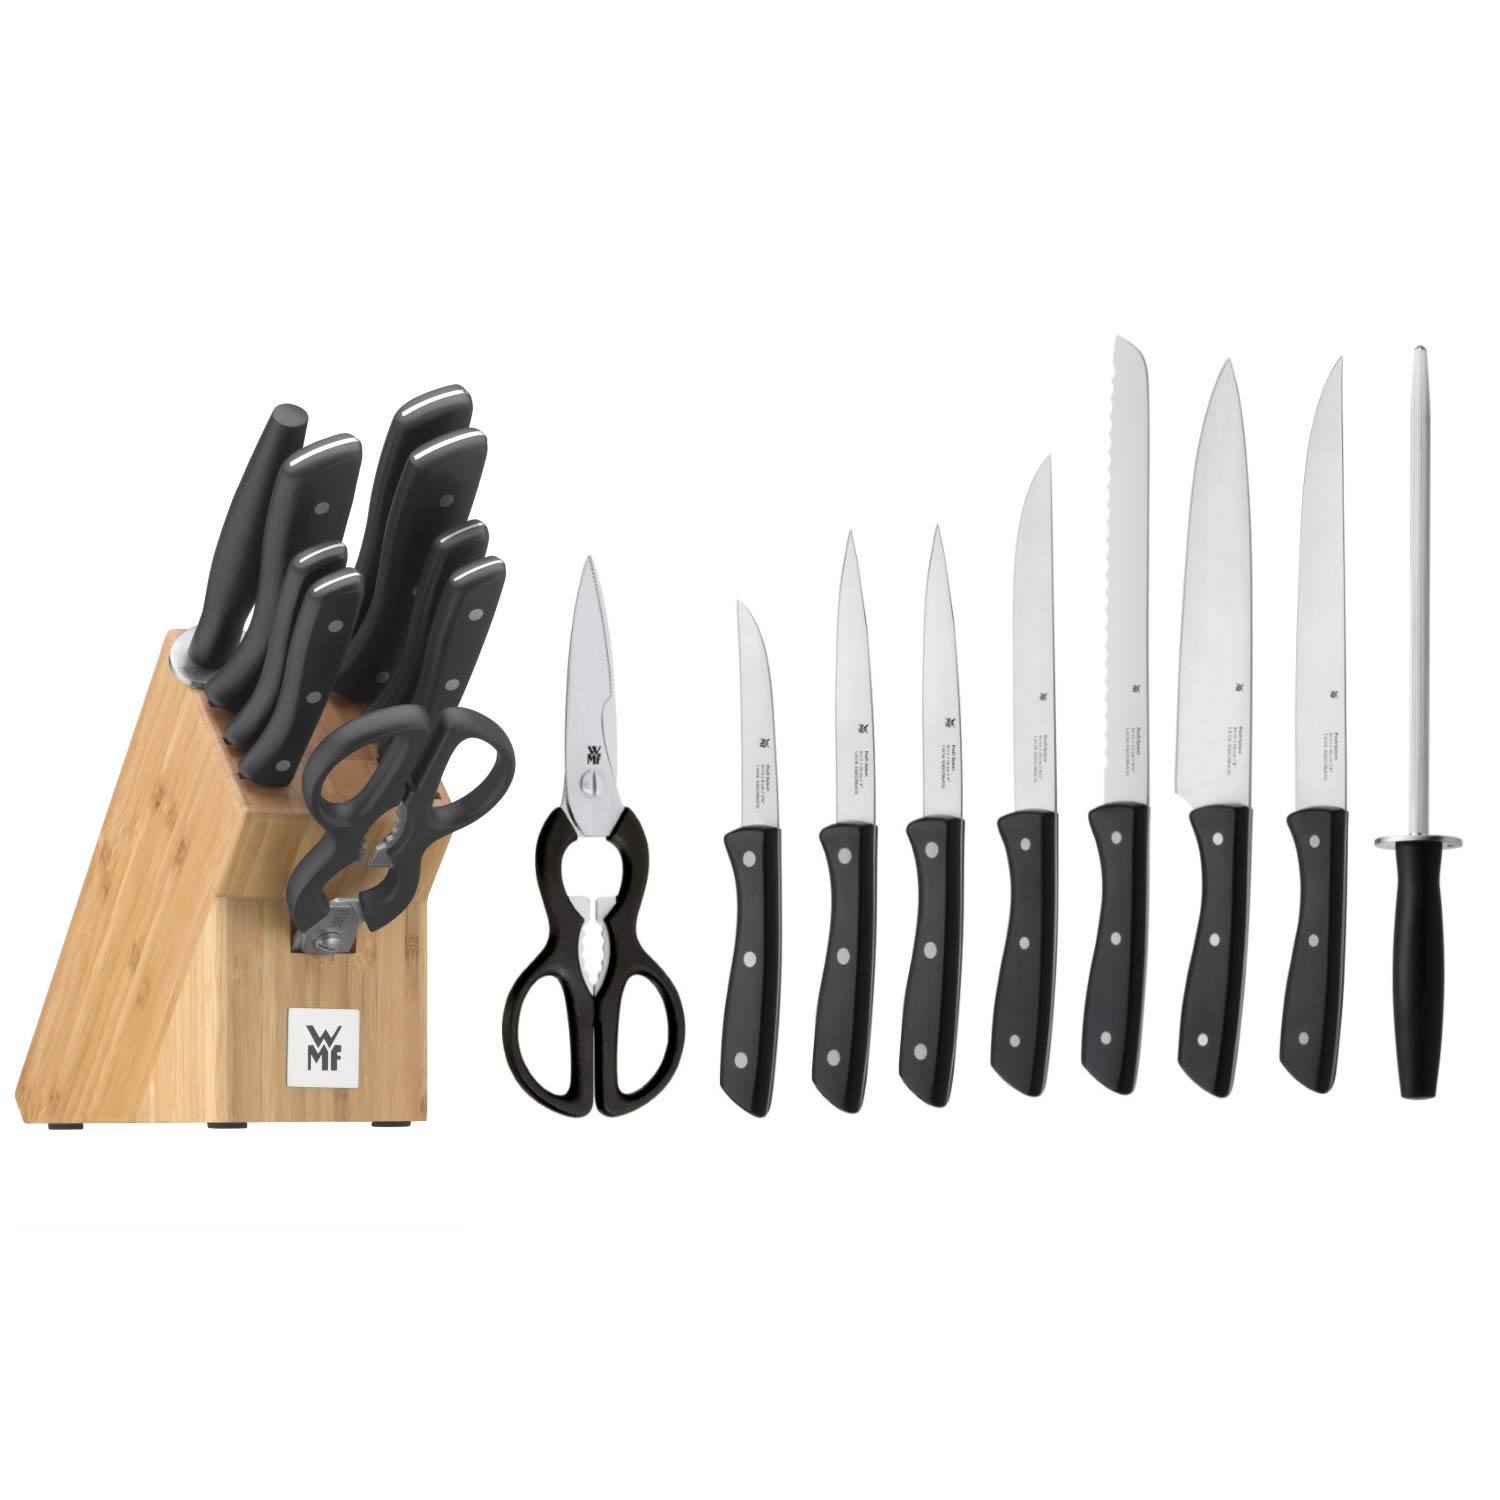 Aurora Trade Knife Sharpeners - Kitchen Knife Scissor Sharpener to Repair, Restore, Sharp, Polish Blades, Professional Manual Chef Steel Knife Scissor